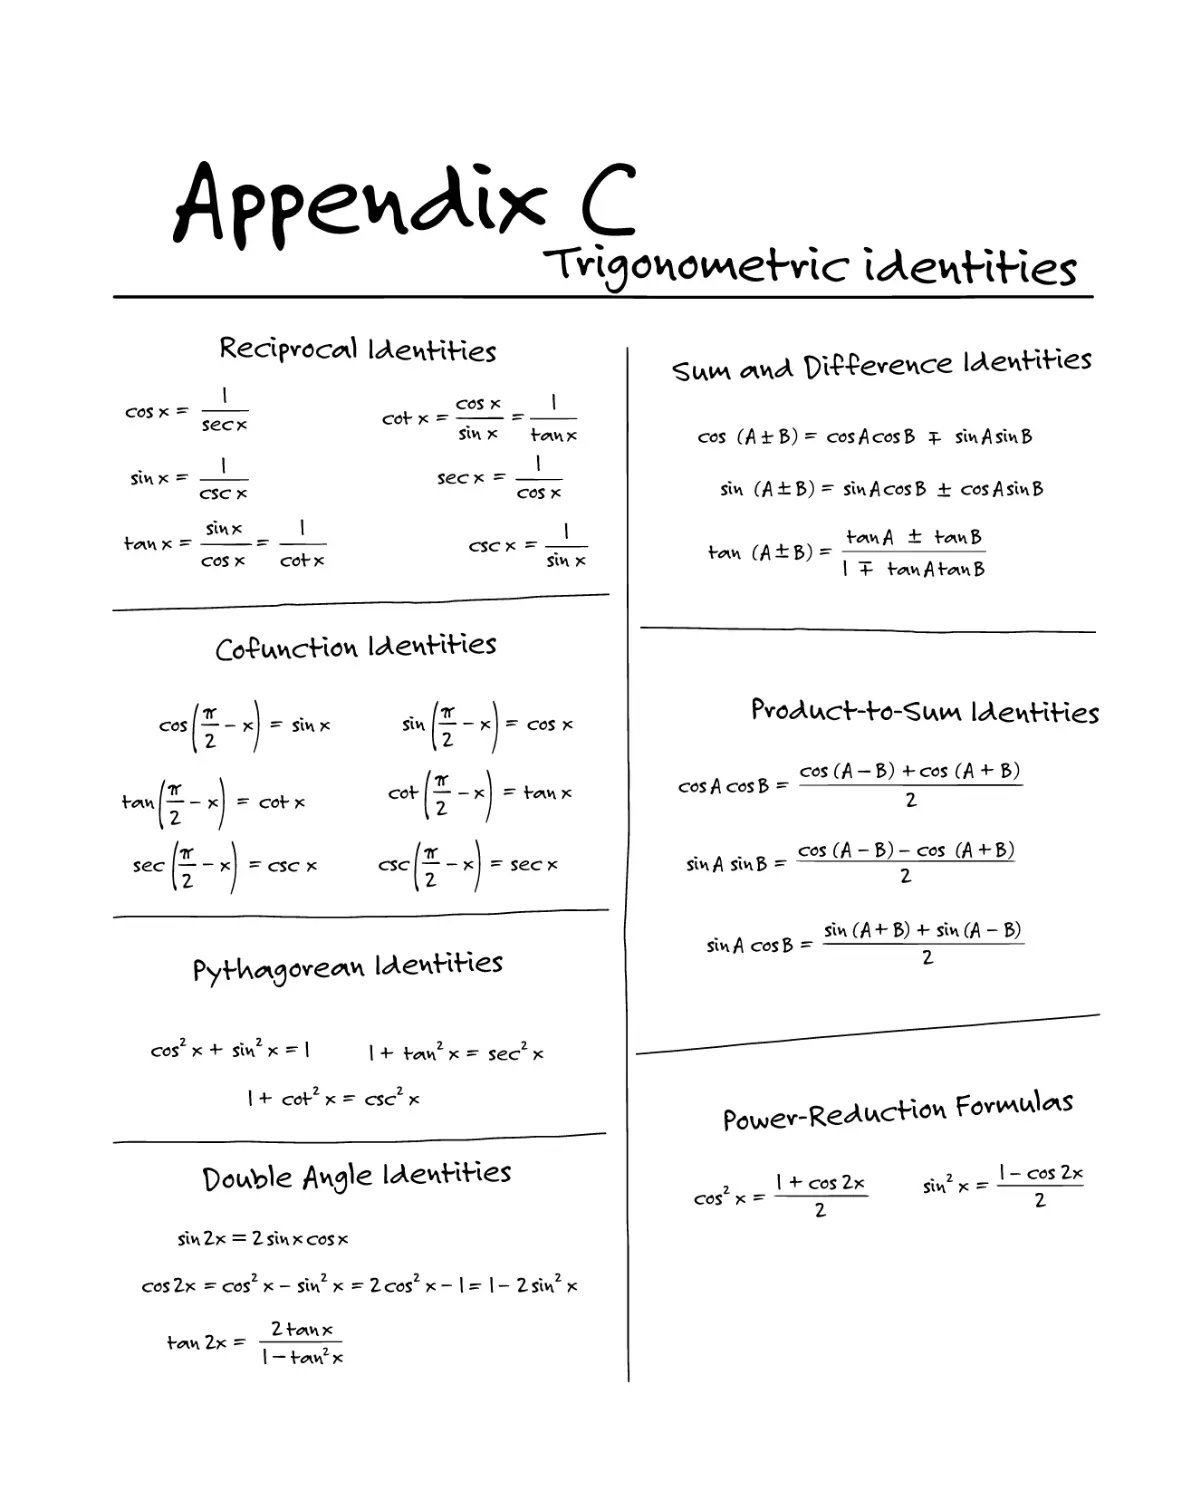 Appendix C: Trigonometric Identities 553